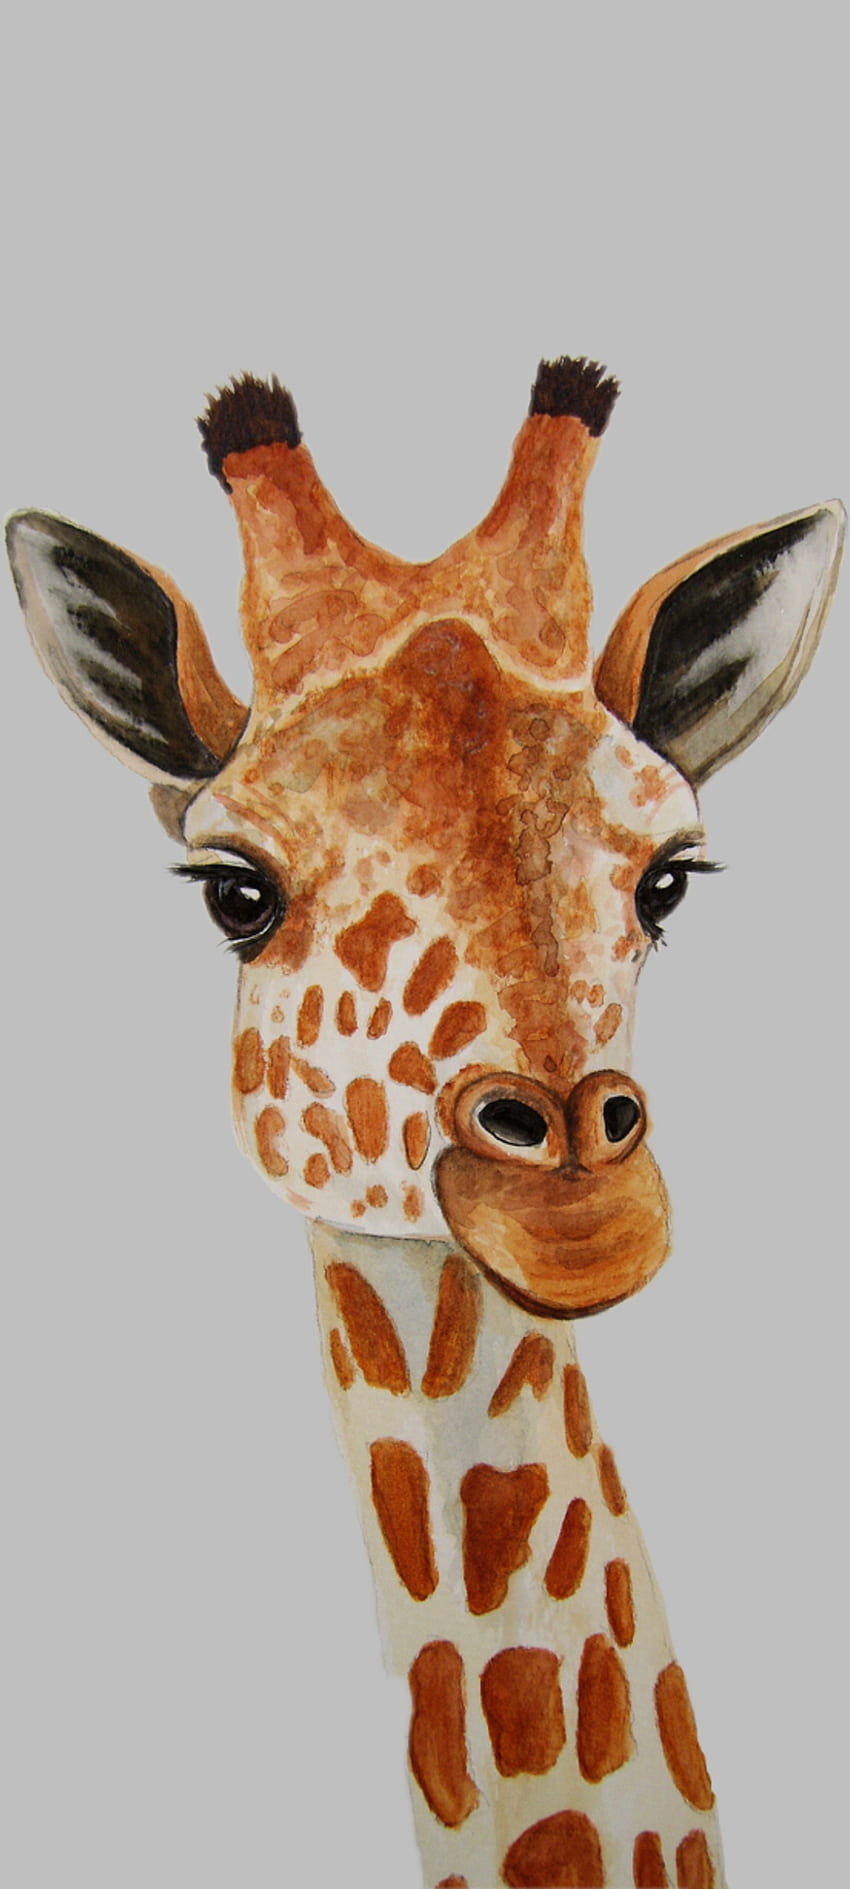 Pareja de jirafas | Giraffe pictures, Giraffe, National geographic animals